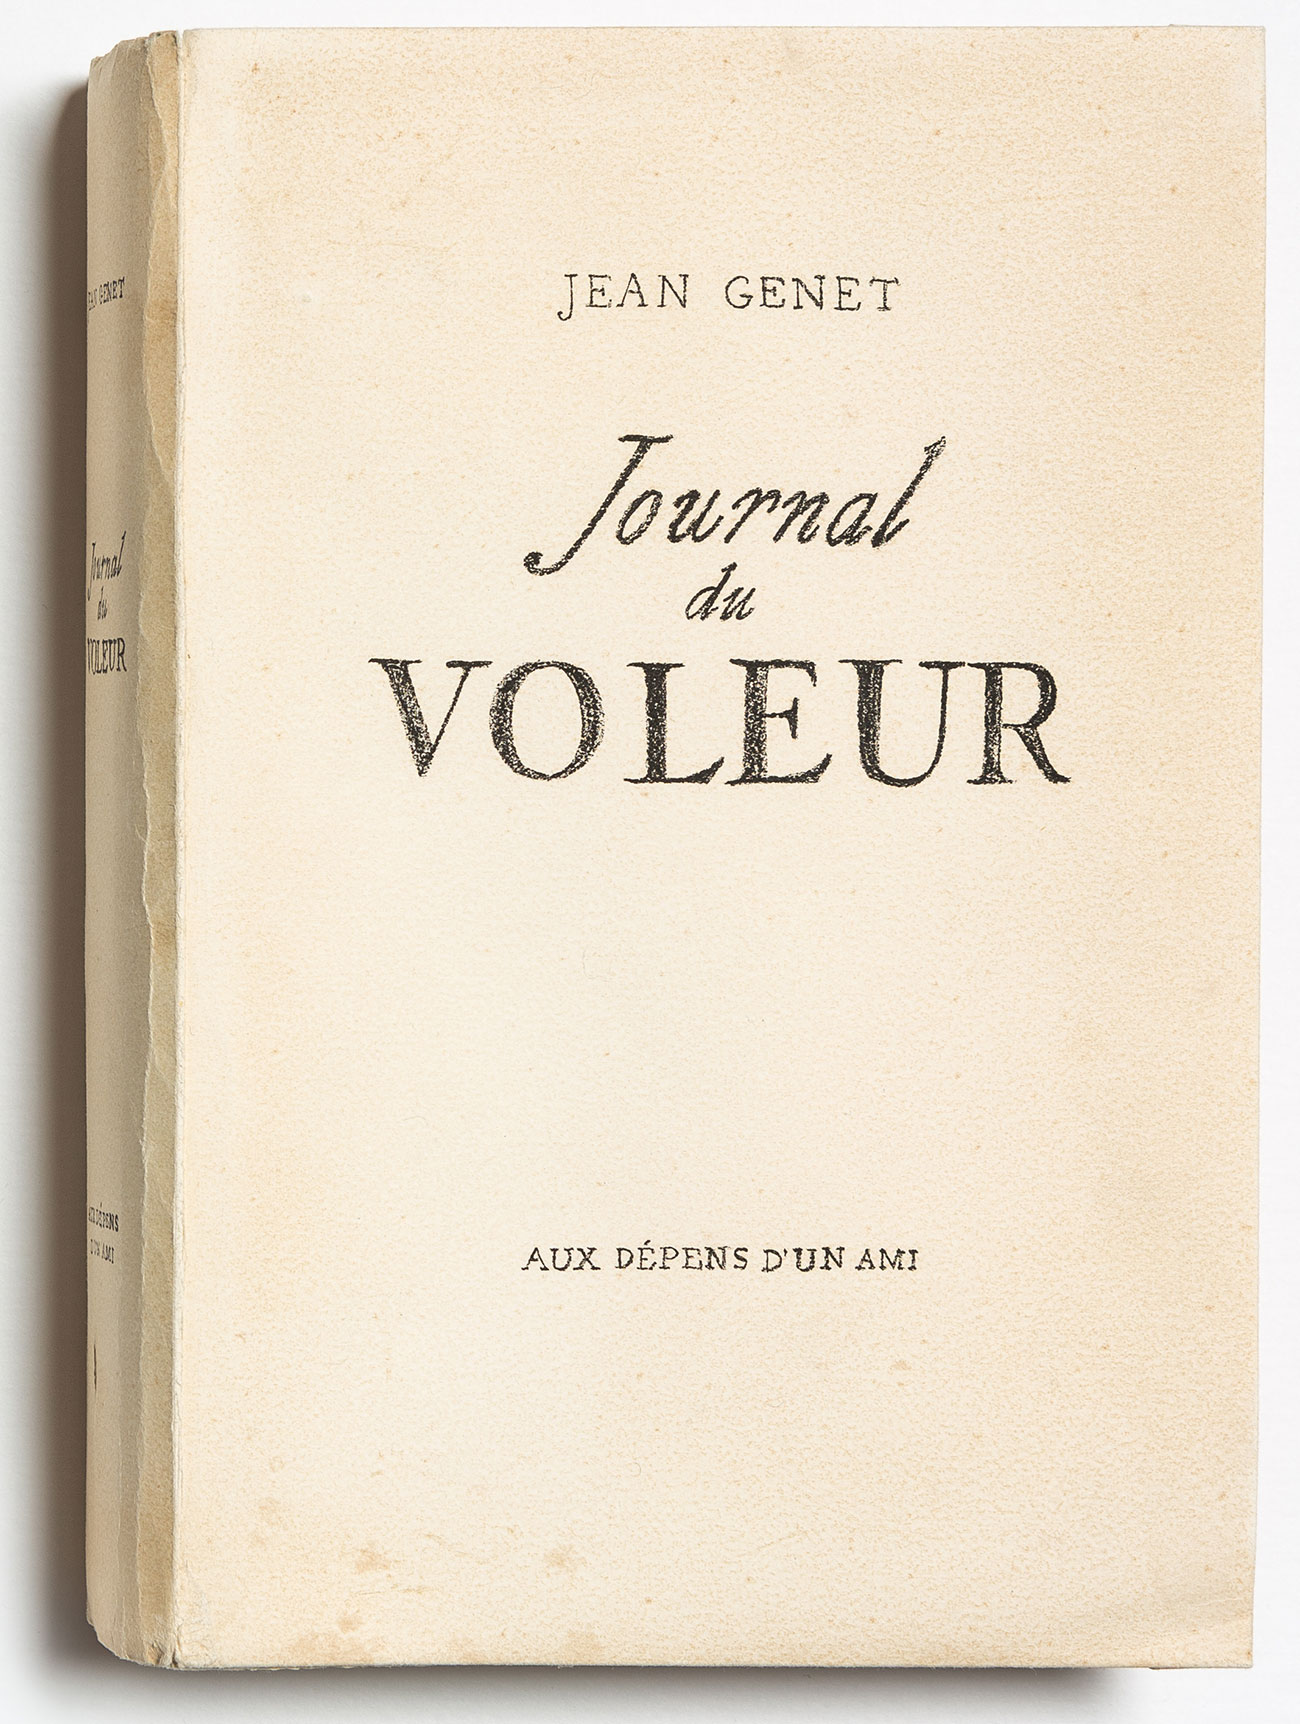 Journal du voleur ed 1948 © fonds Jean Genet imec Photo Michael Quemener